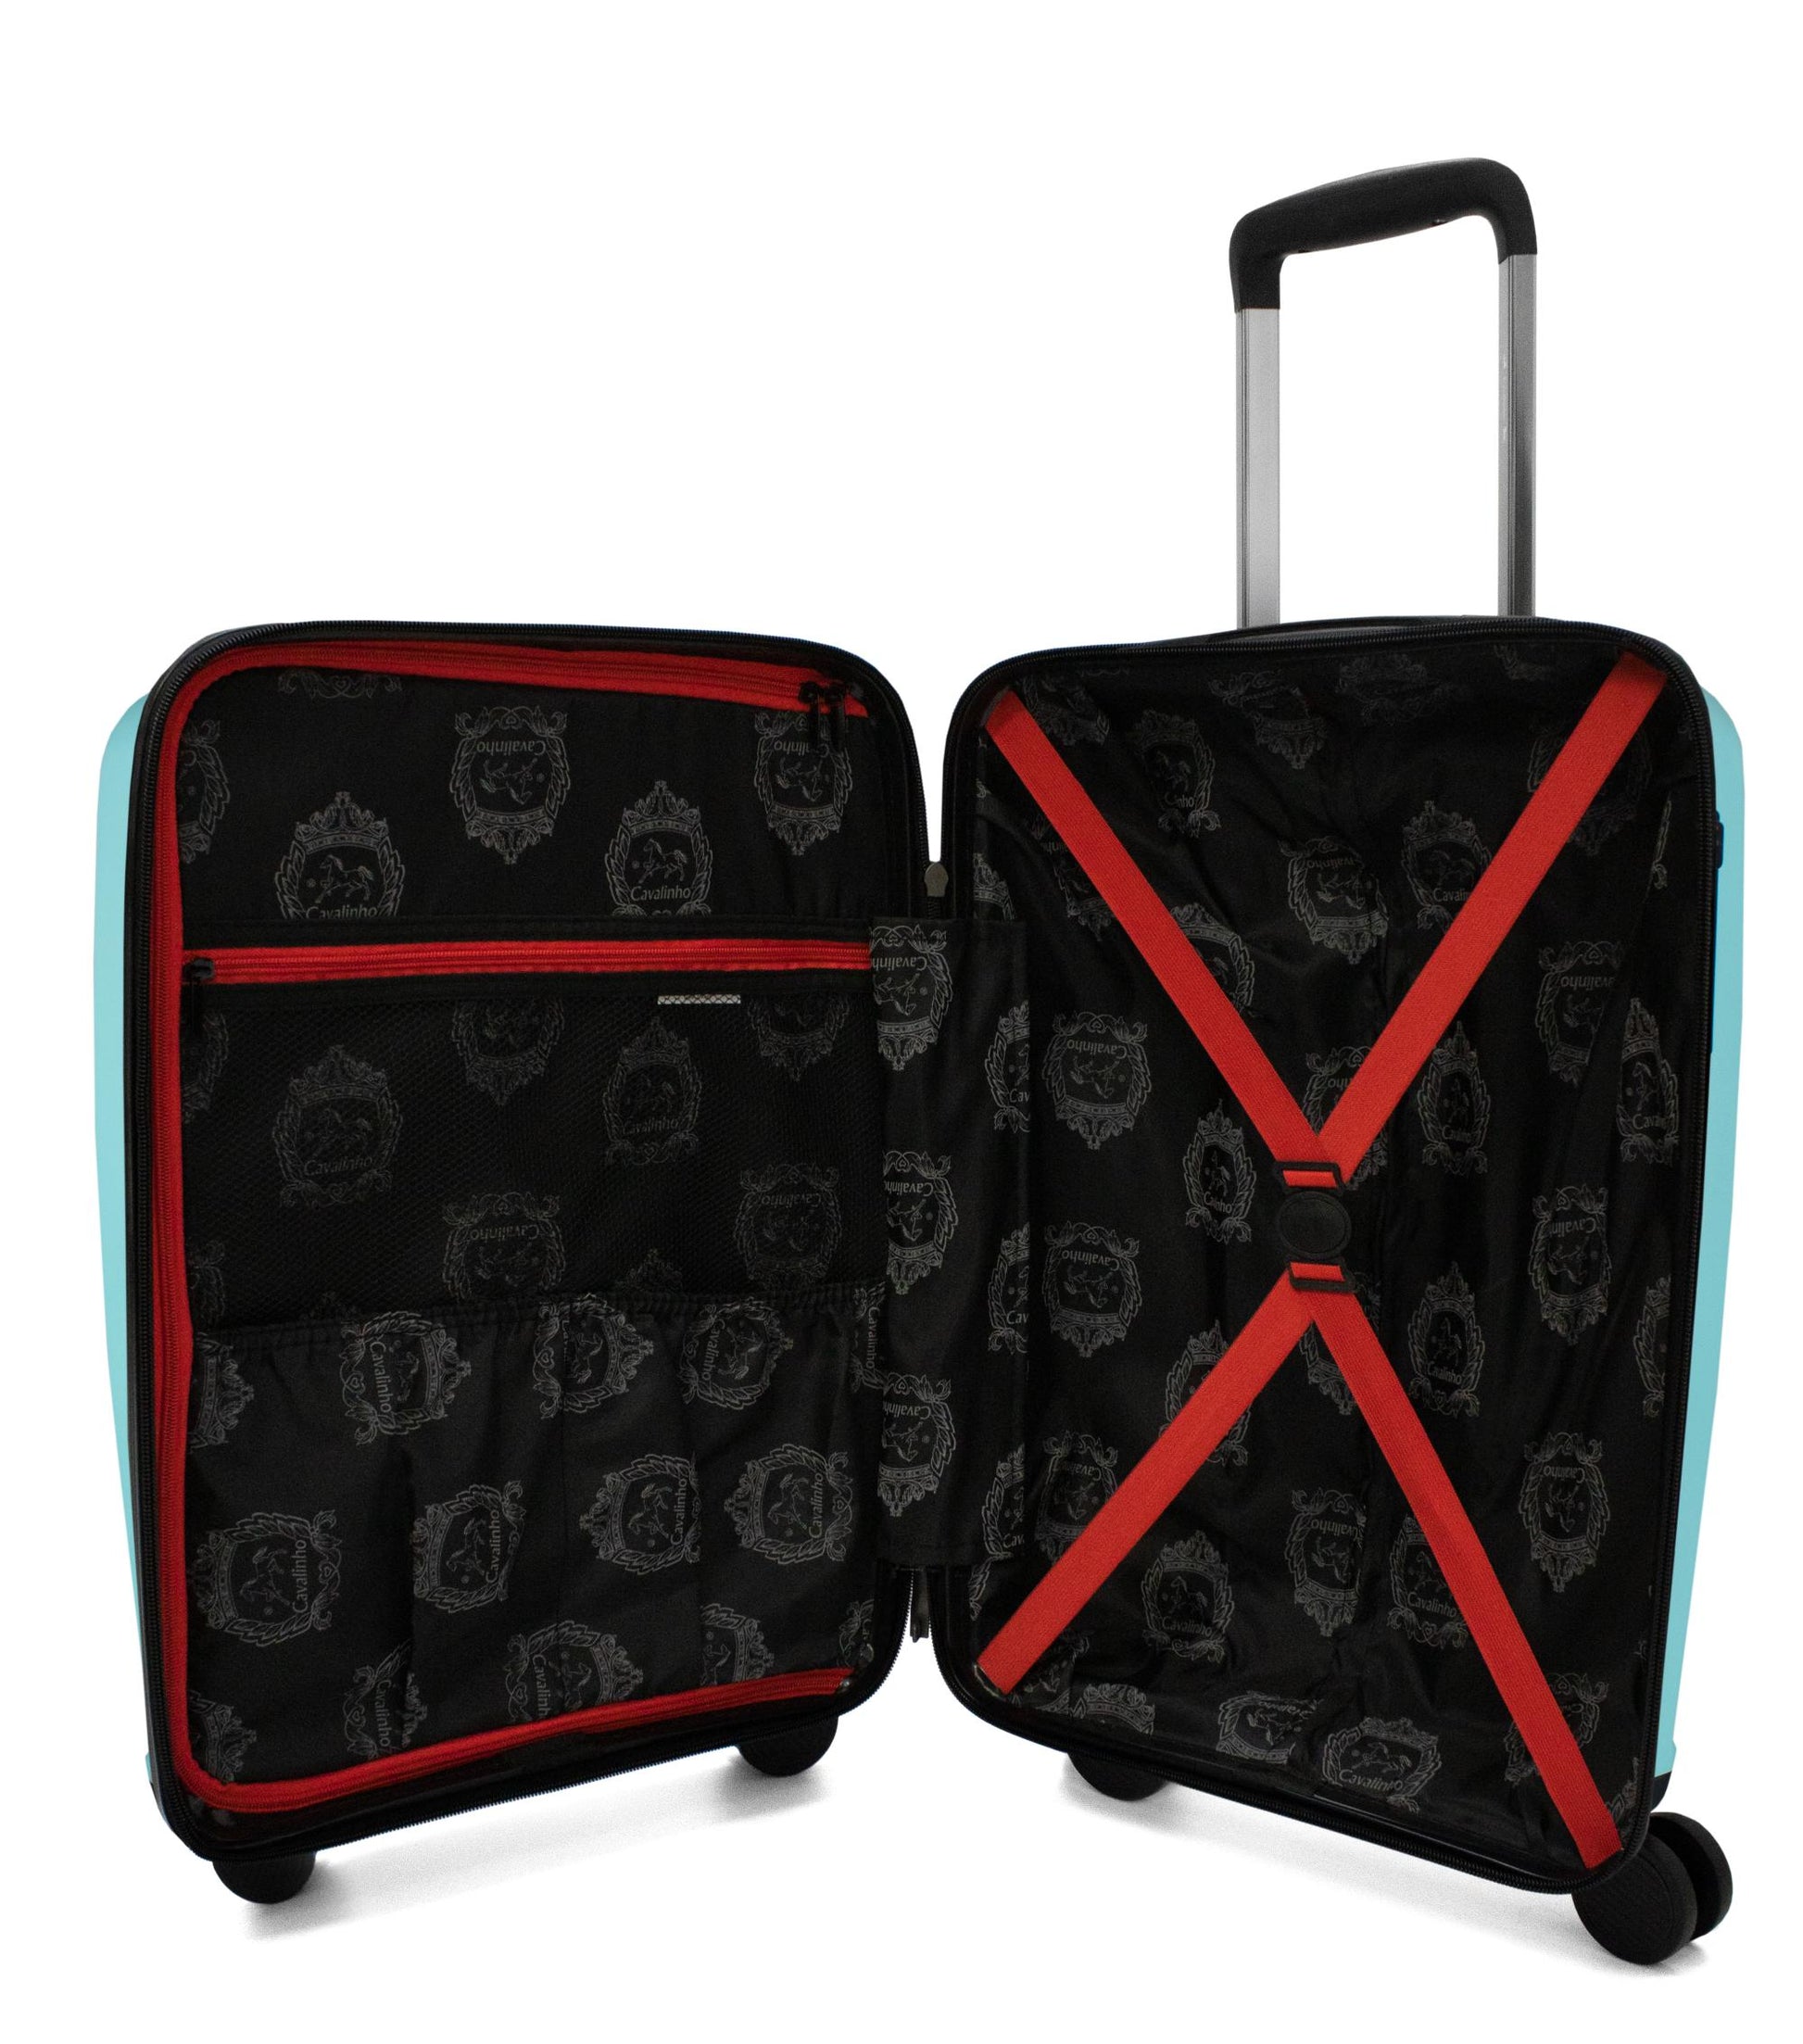 Cavalinho Colorful Carry-on Hardside Luggage (19") - 19 inch LightBlue - 68020004.10.19_5